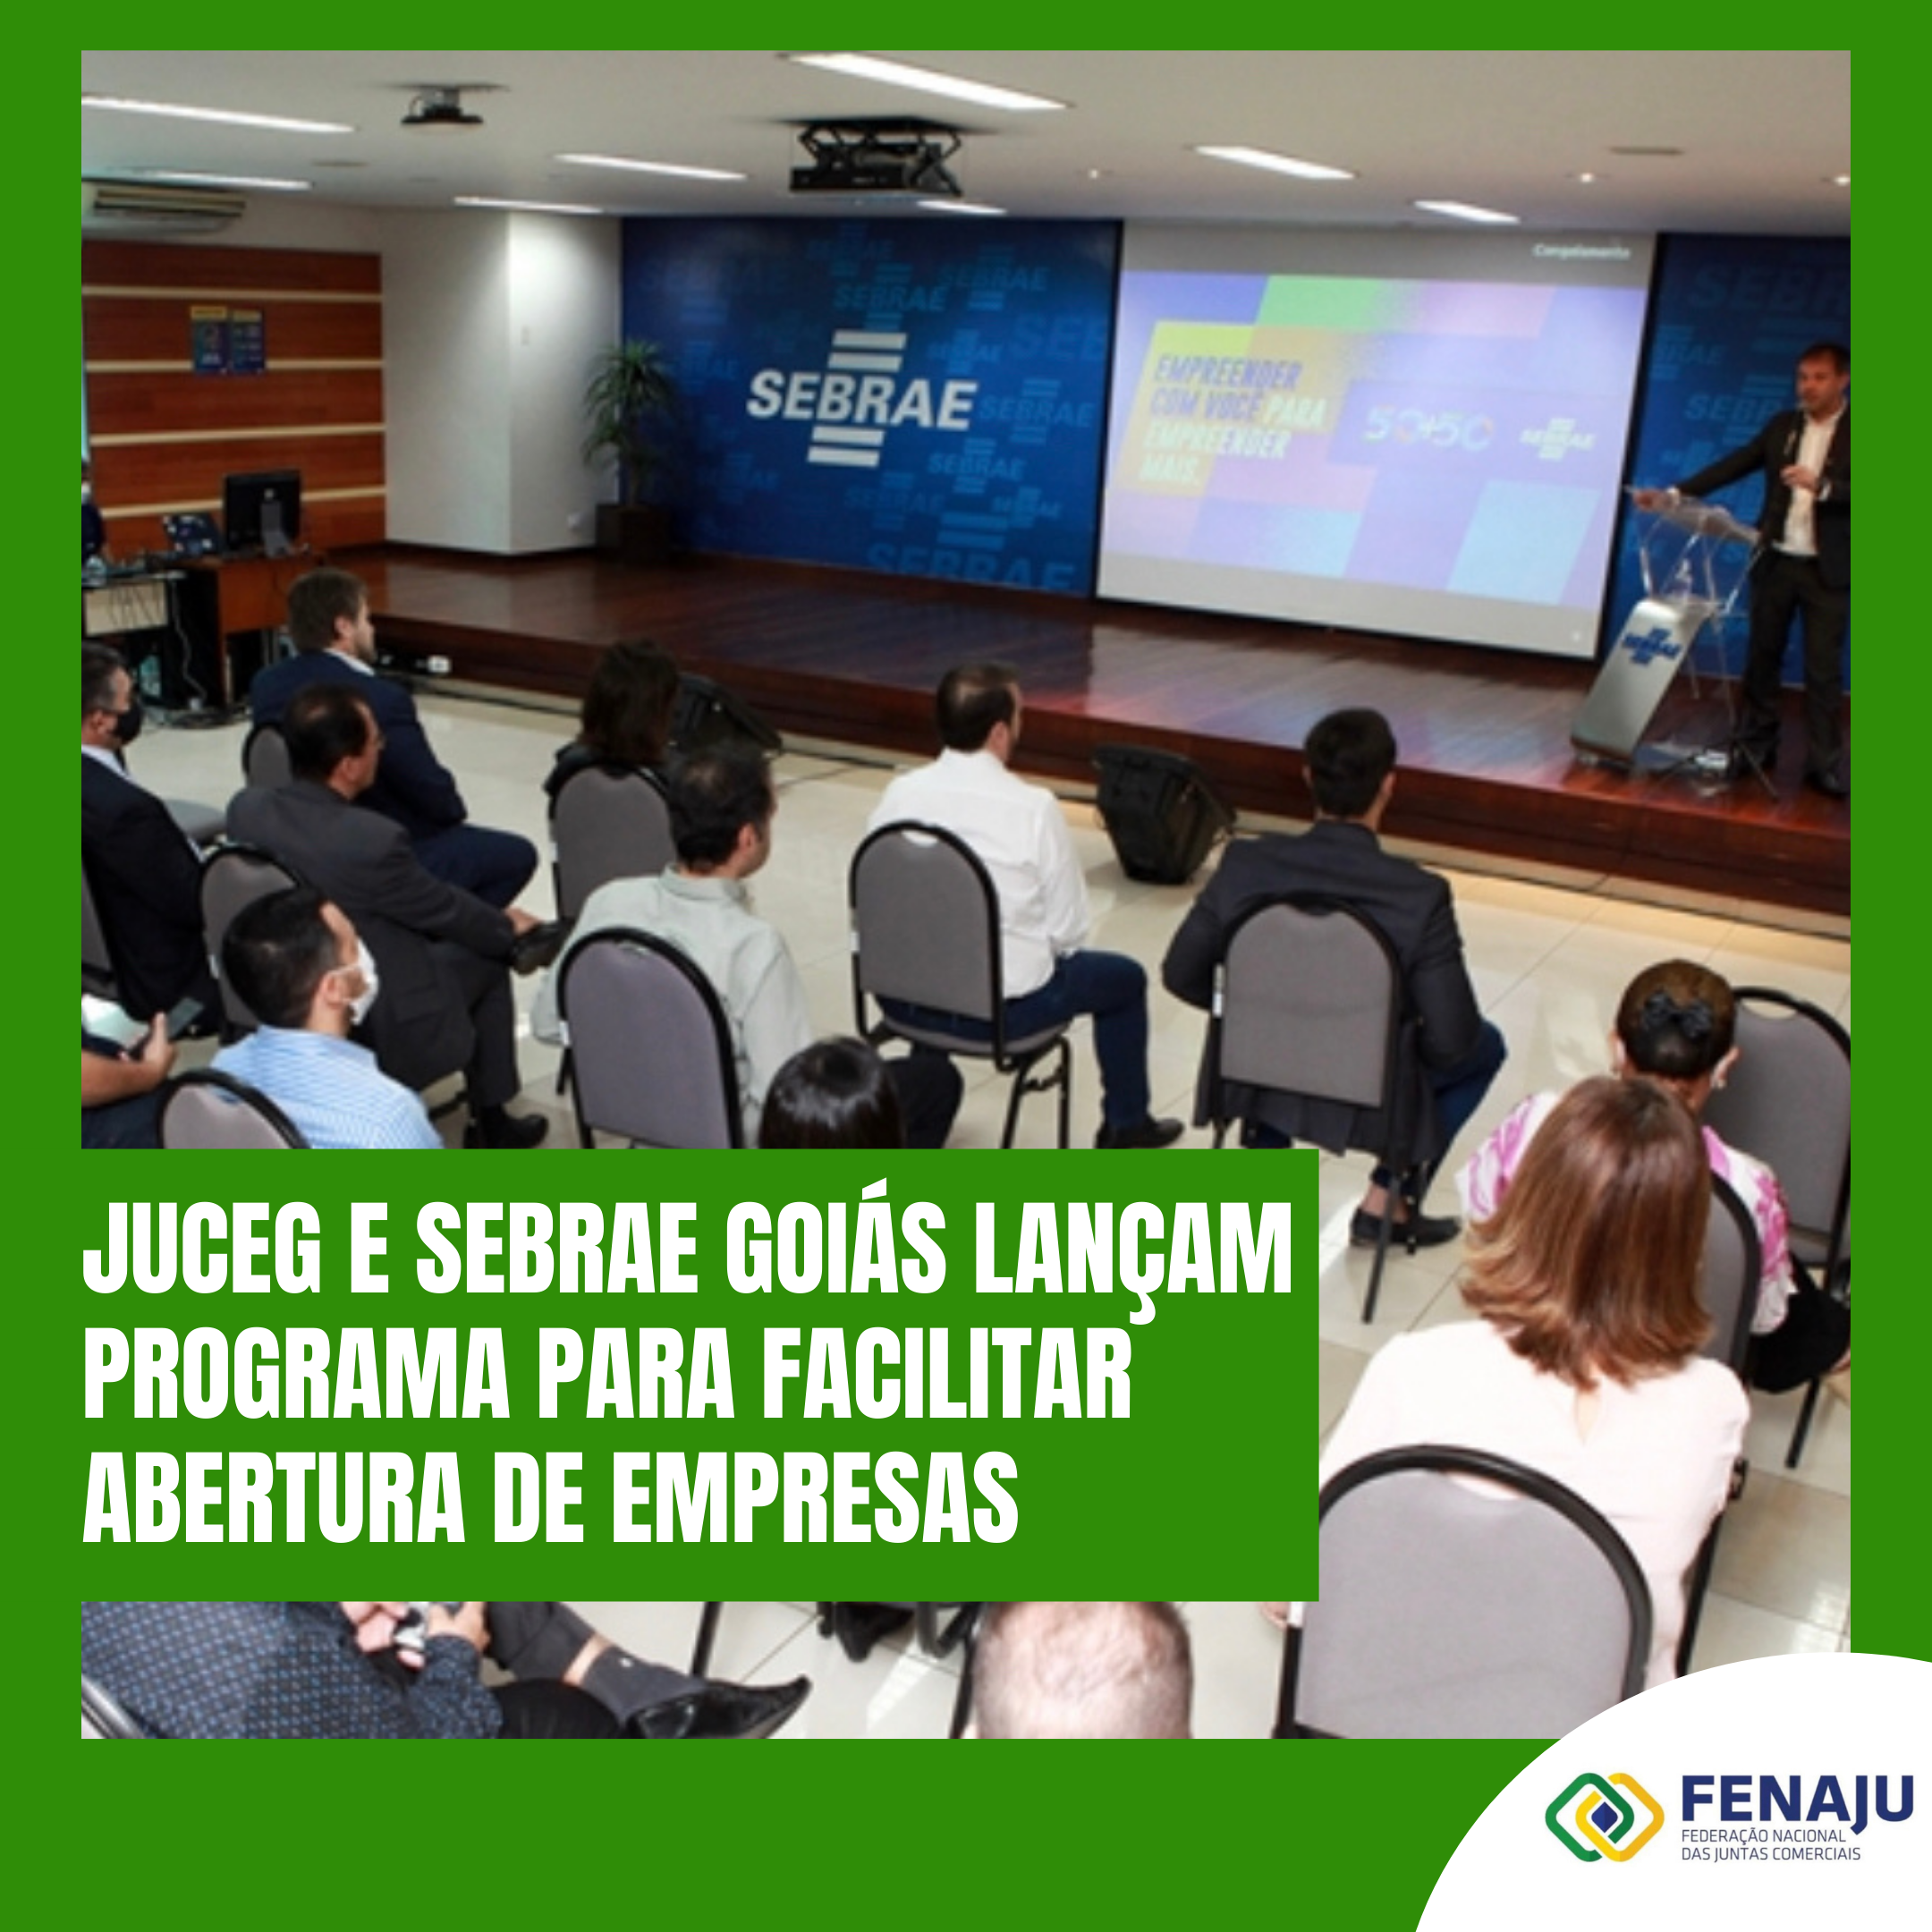 Juceg e Sebrae Goiás lançam programa para facilitar abertura de empresas 